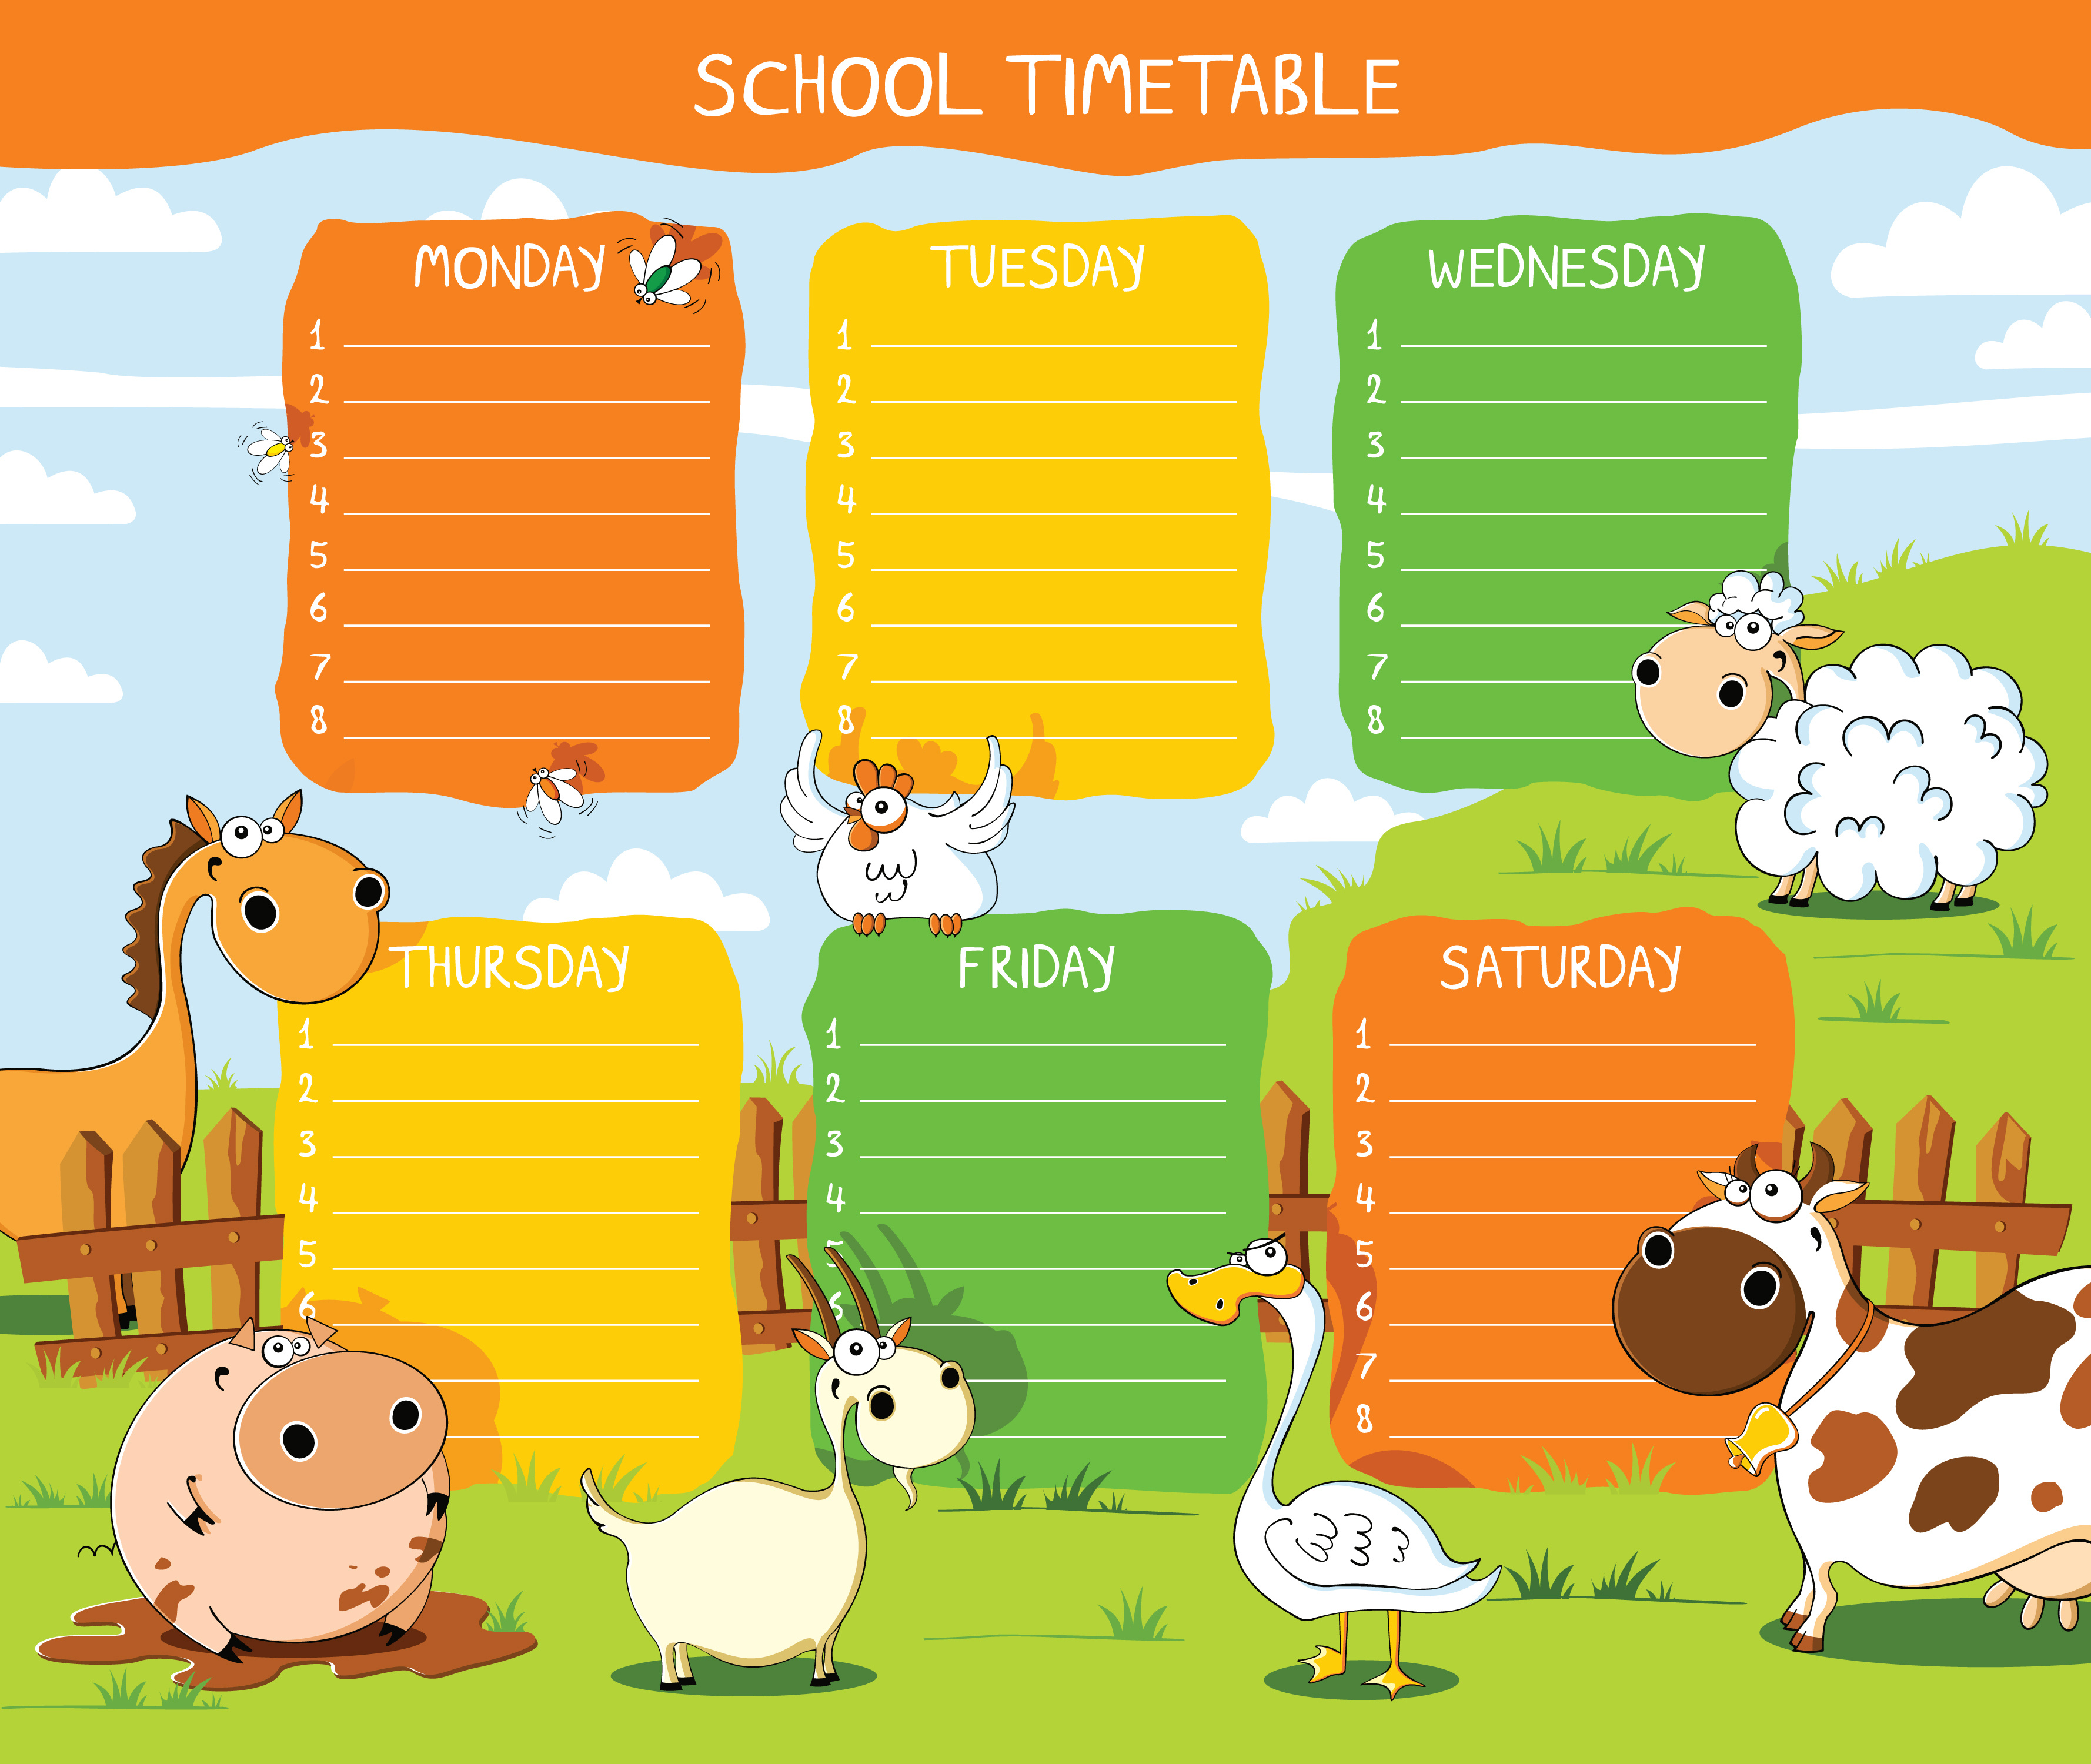 school-timetable-horarios-en-ingles6